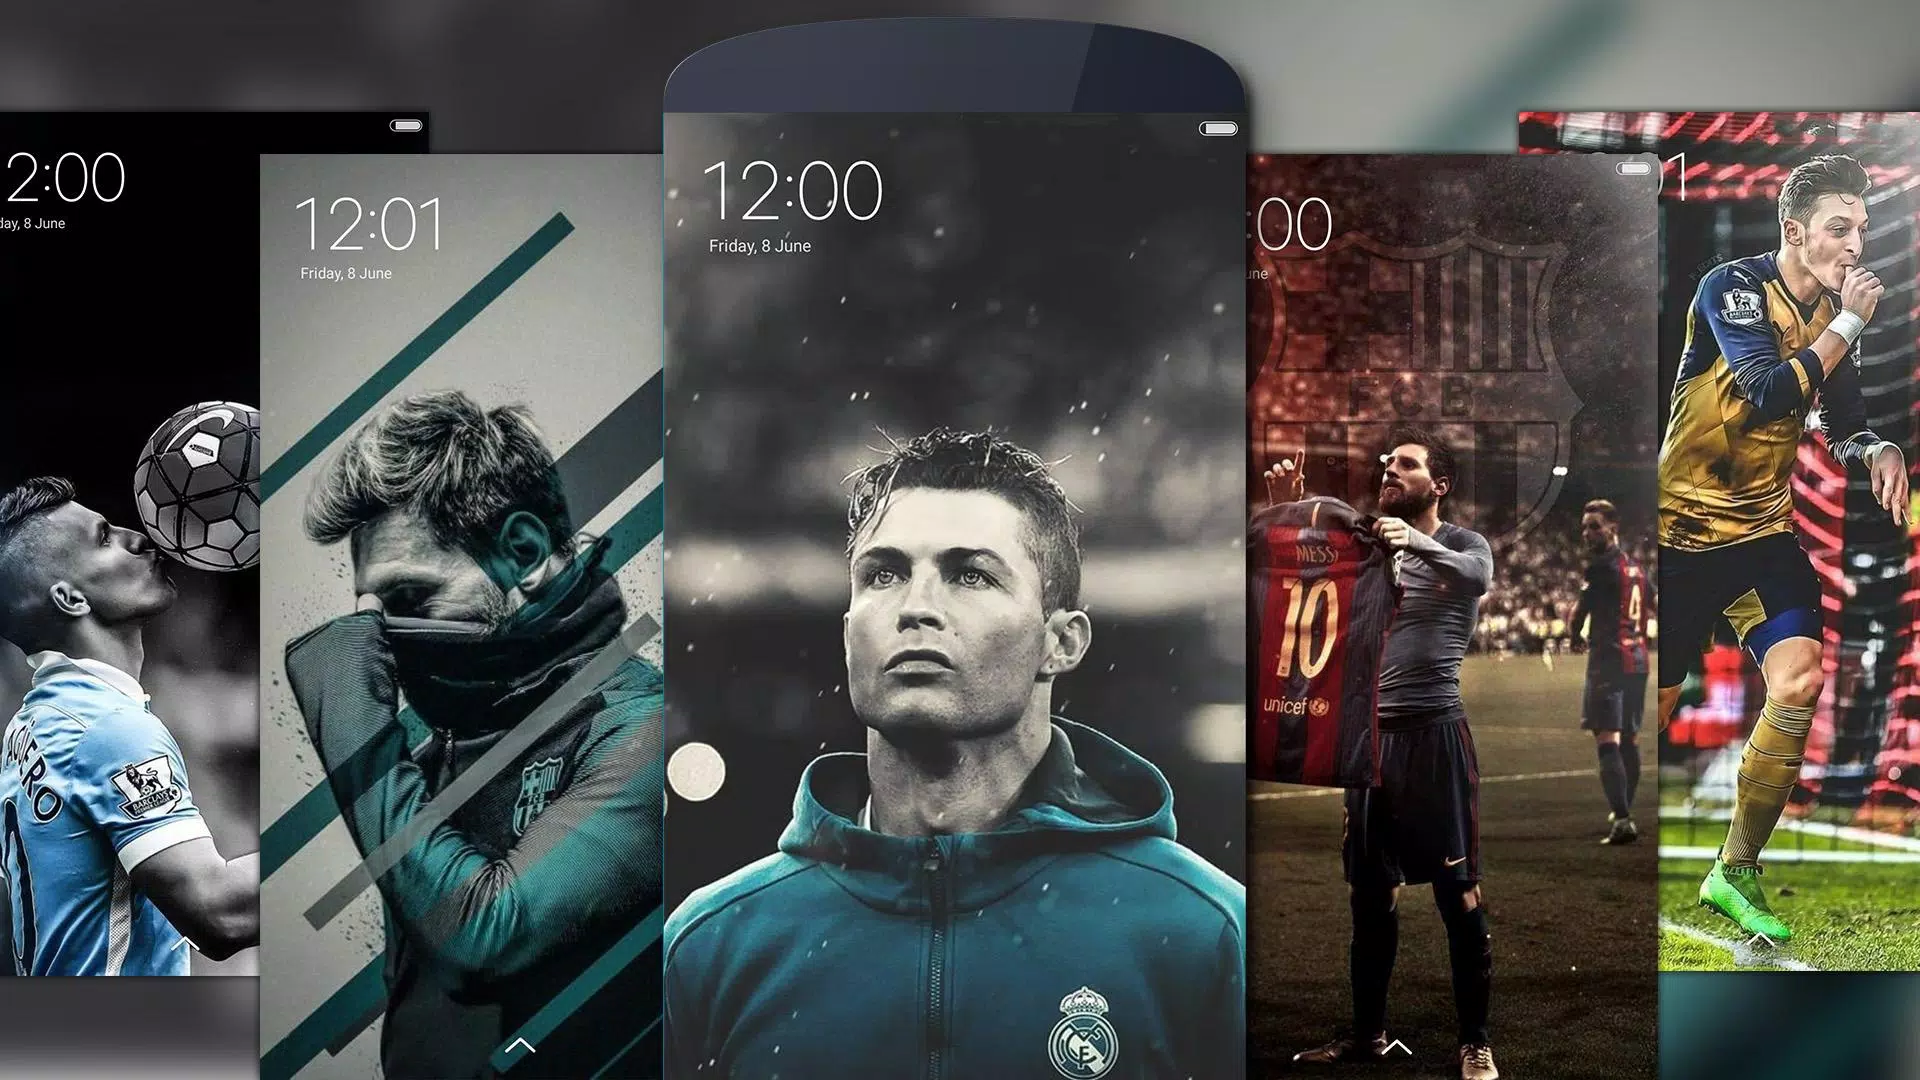 EA Sports FC 24 Game Football Player 4K Wallpaper iPhone HD Phone